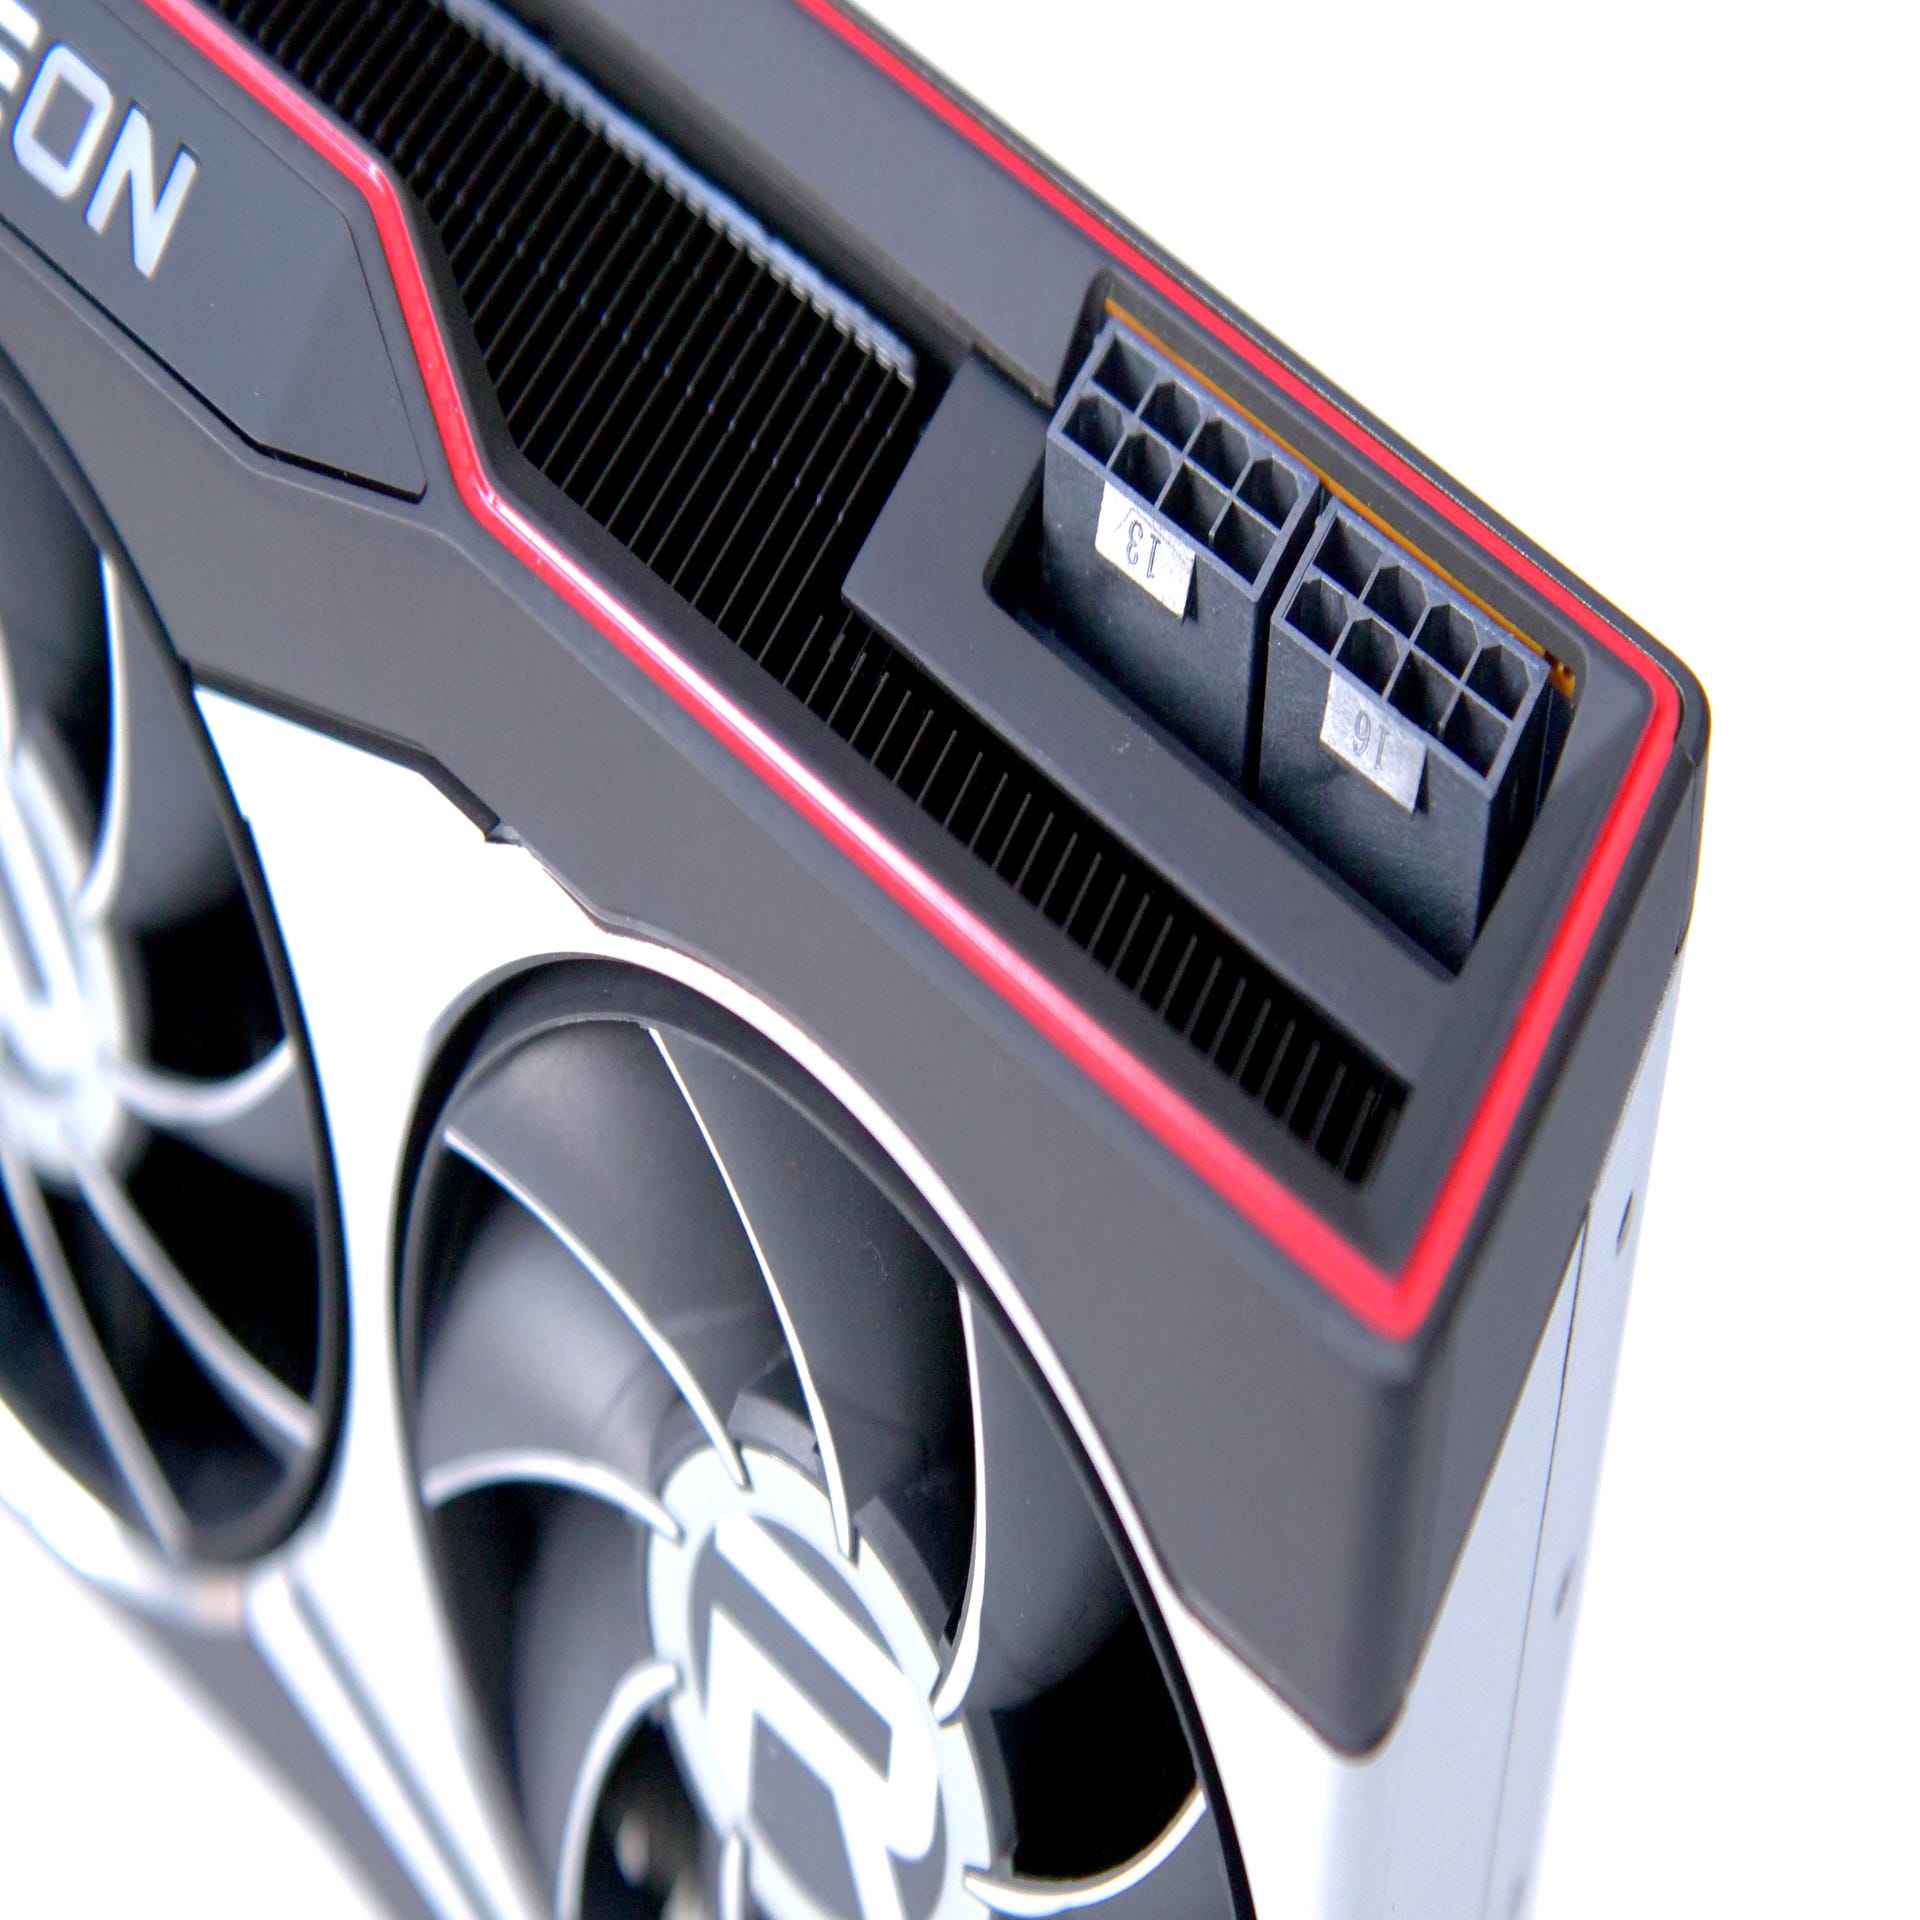 Even Bigger Big Navi: AMD Radeon RX 6900 XT Gaming Review – Techgage